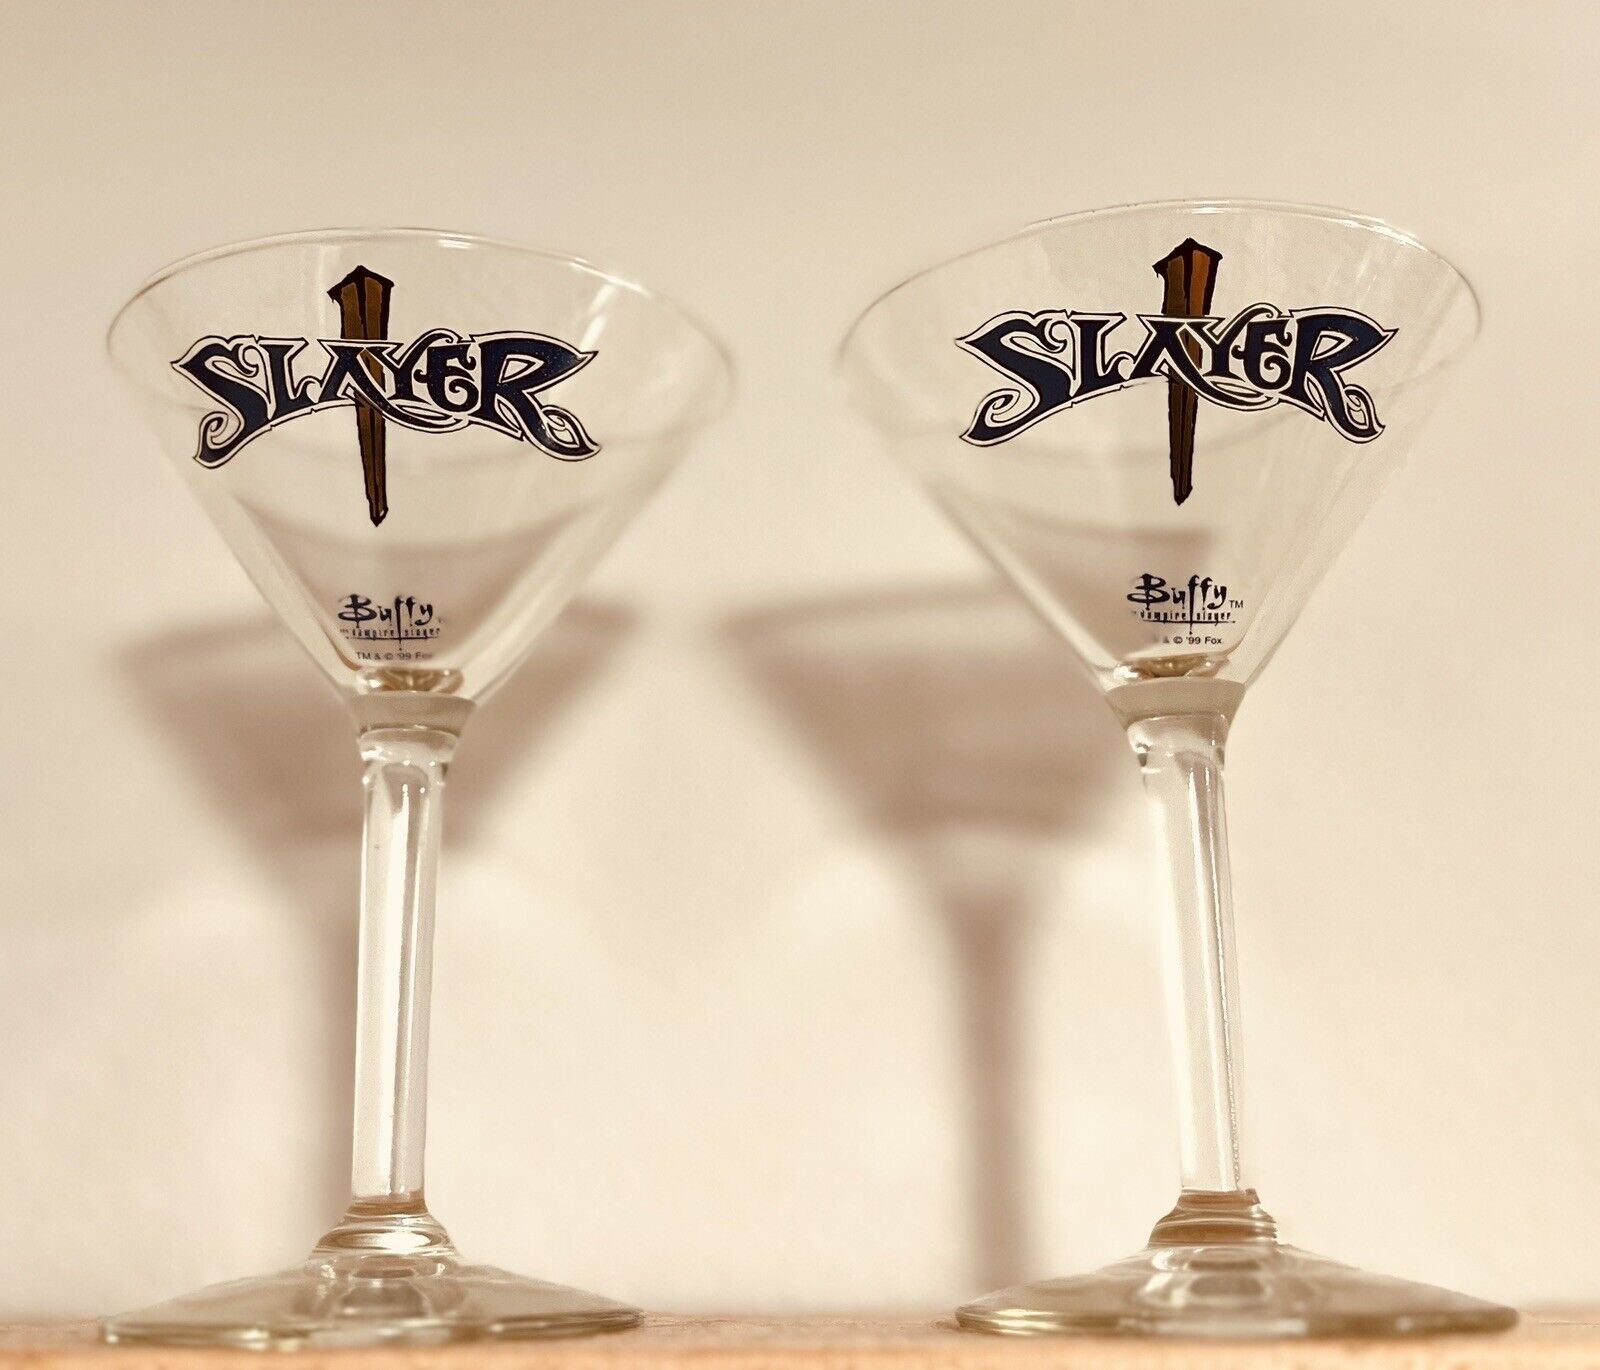 Rare Vintage Buffy the Vampire Slayer Martini Glasses (90s) -Officially Licensed